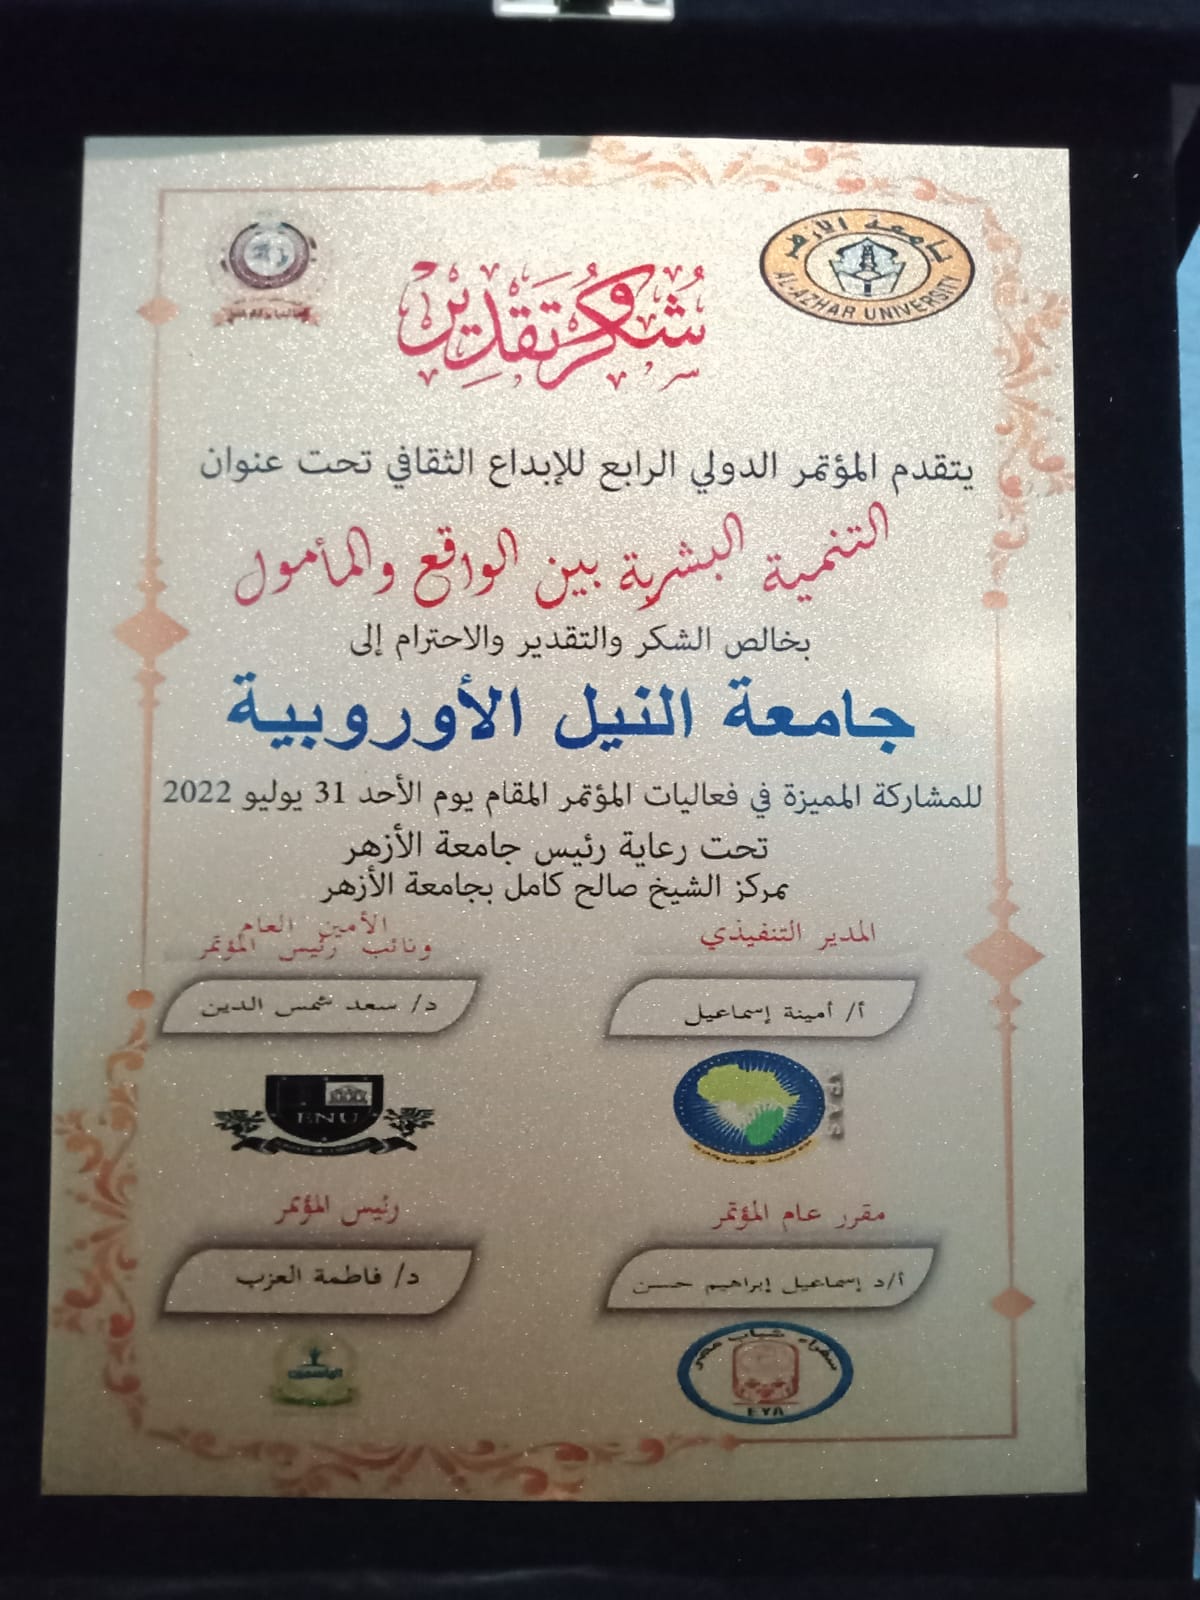 Al-Azhar University awards the European Nile University Medal of Thanks and Appreciation